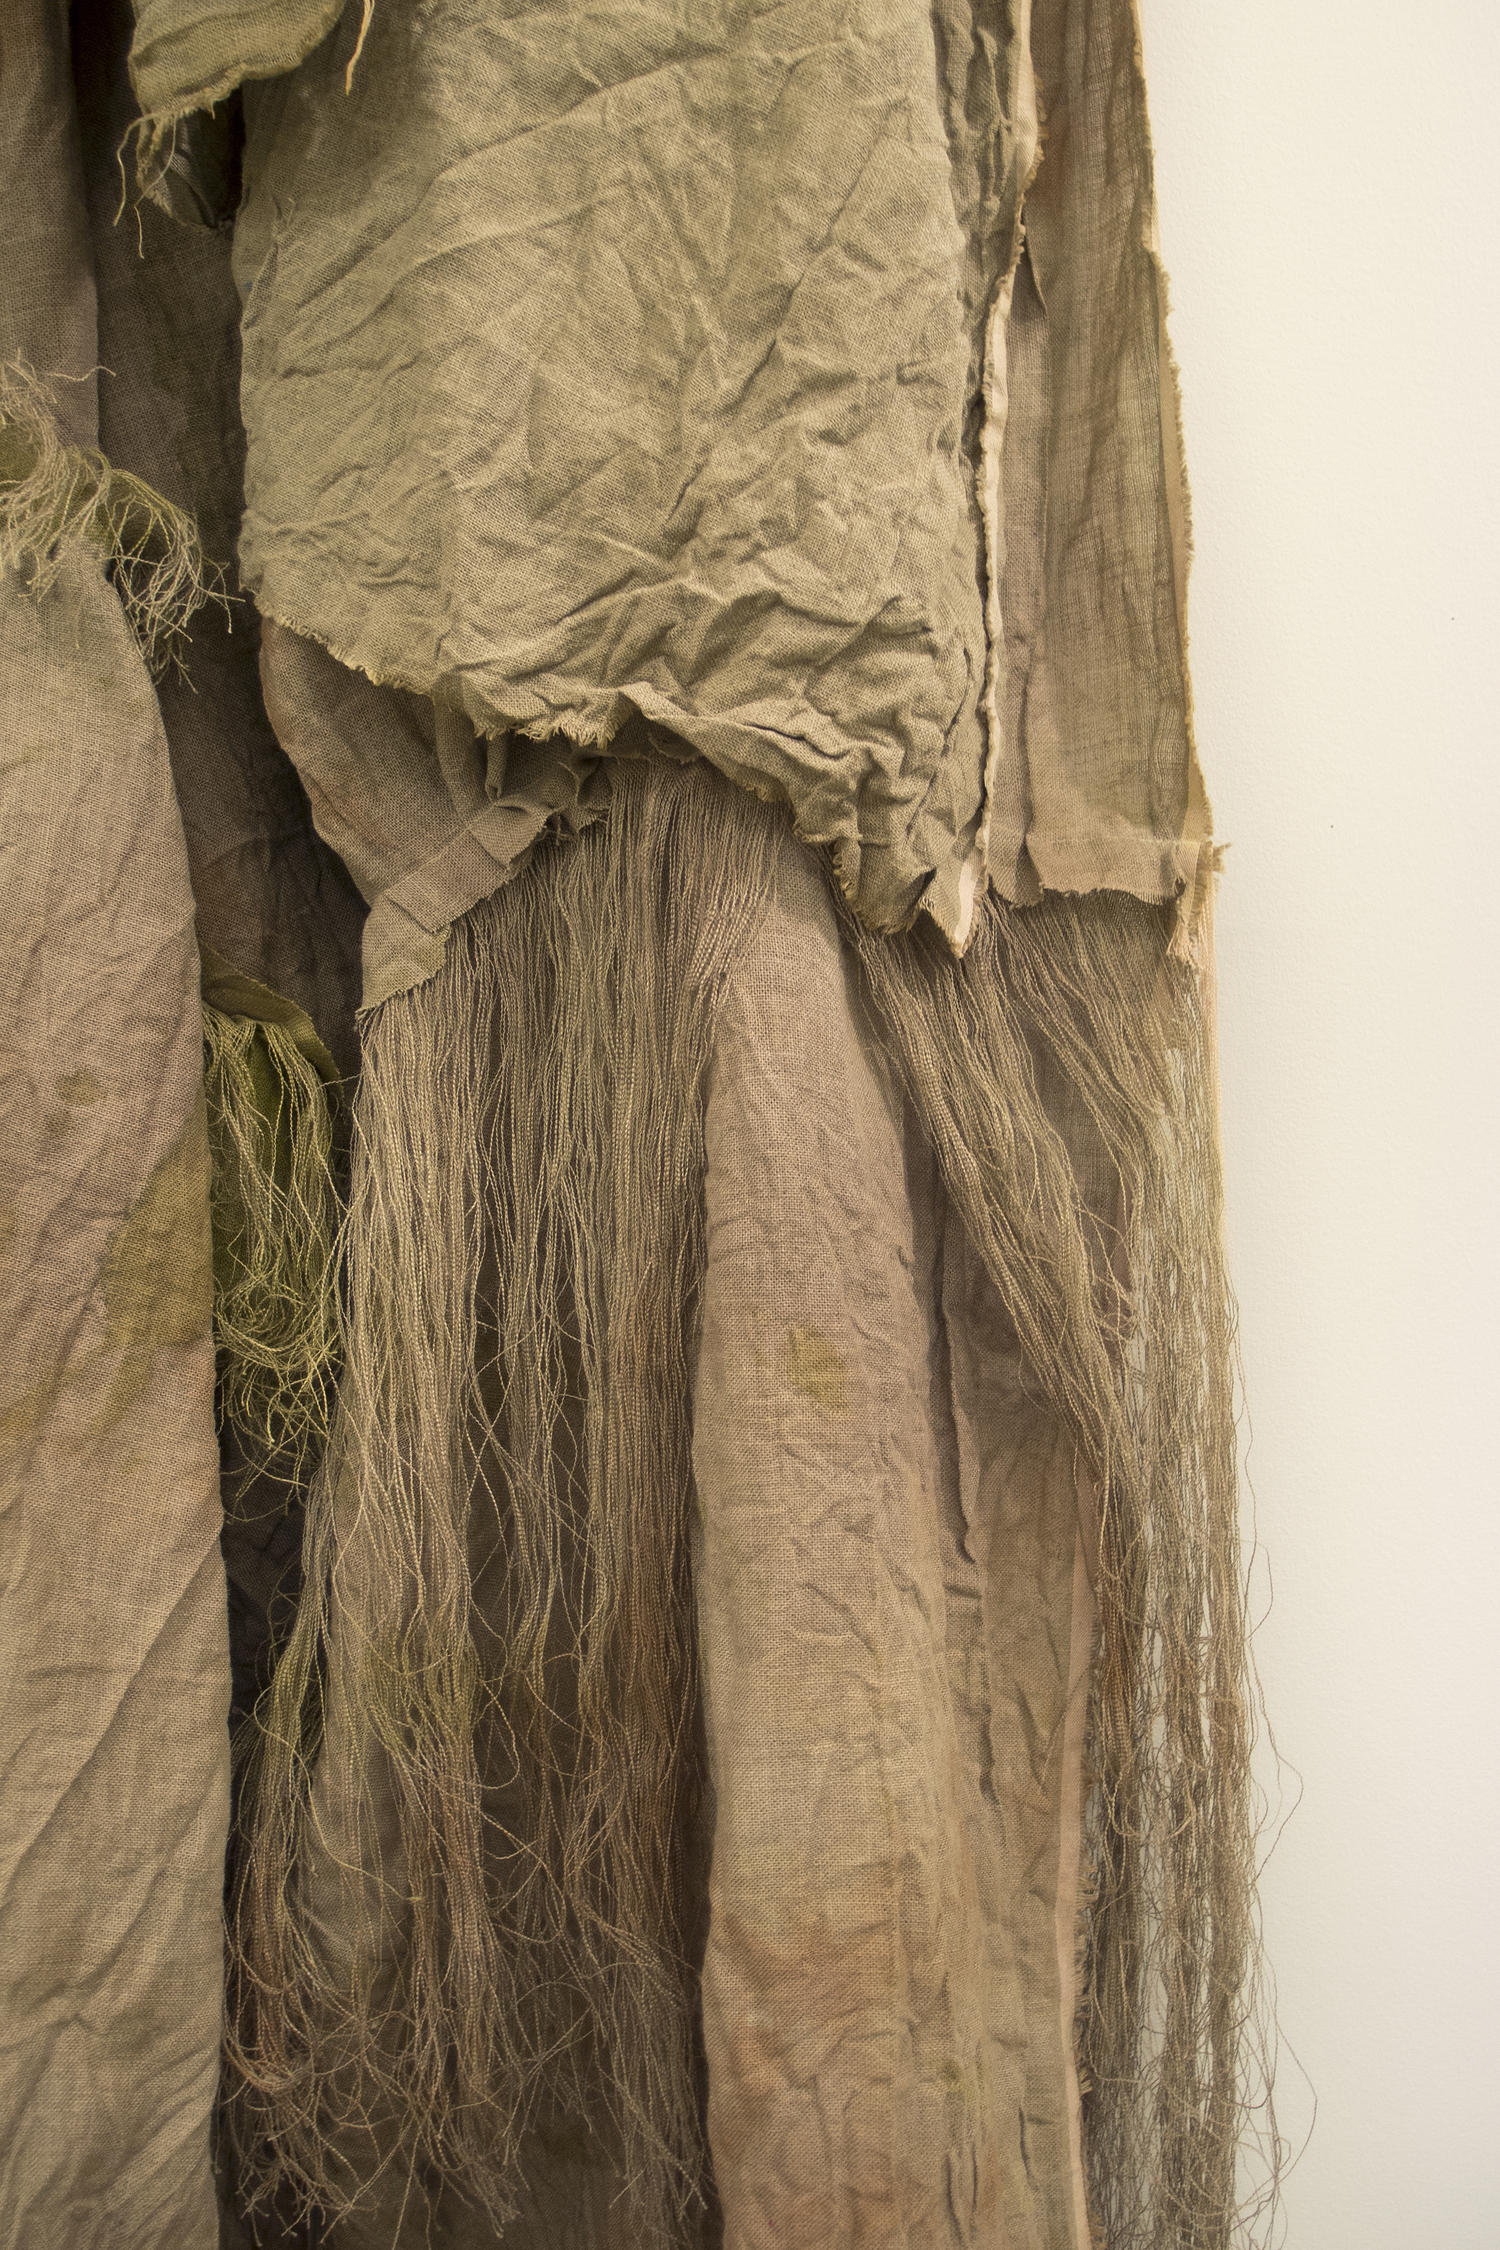   (untitled)  [detail] 2012 fabric dye, acrylic, gouache, watercolor, thread on linen    